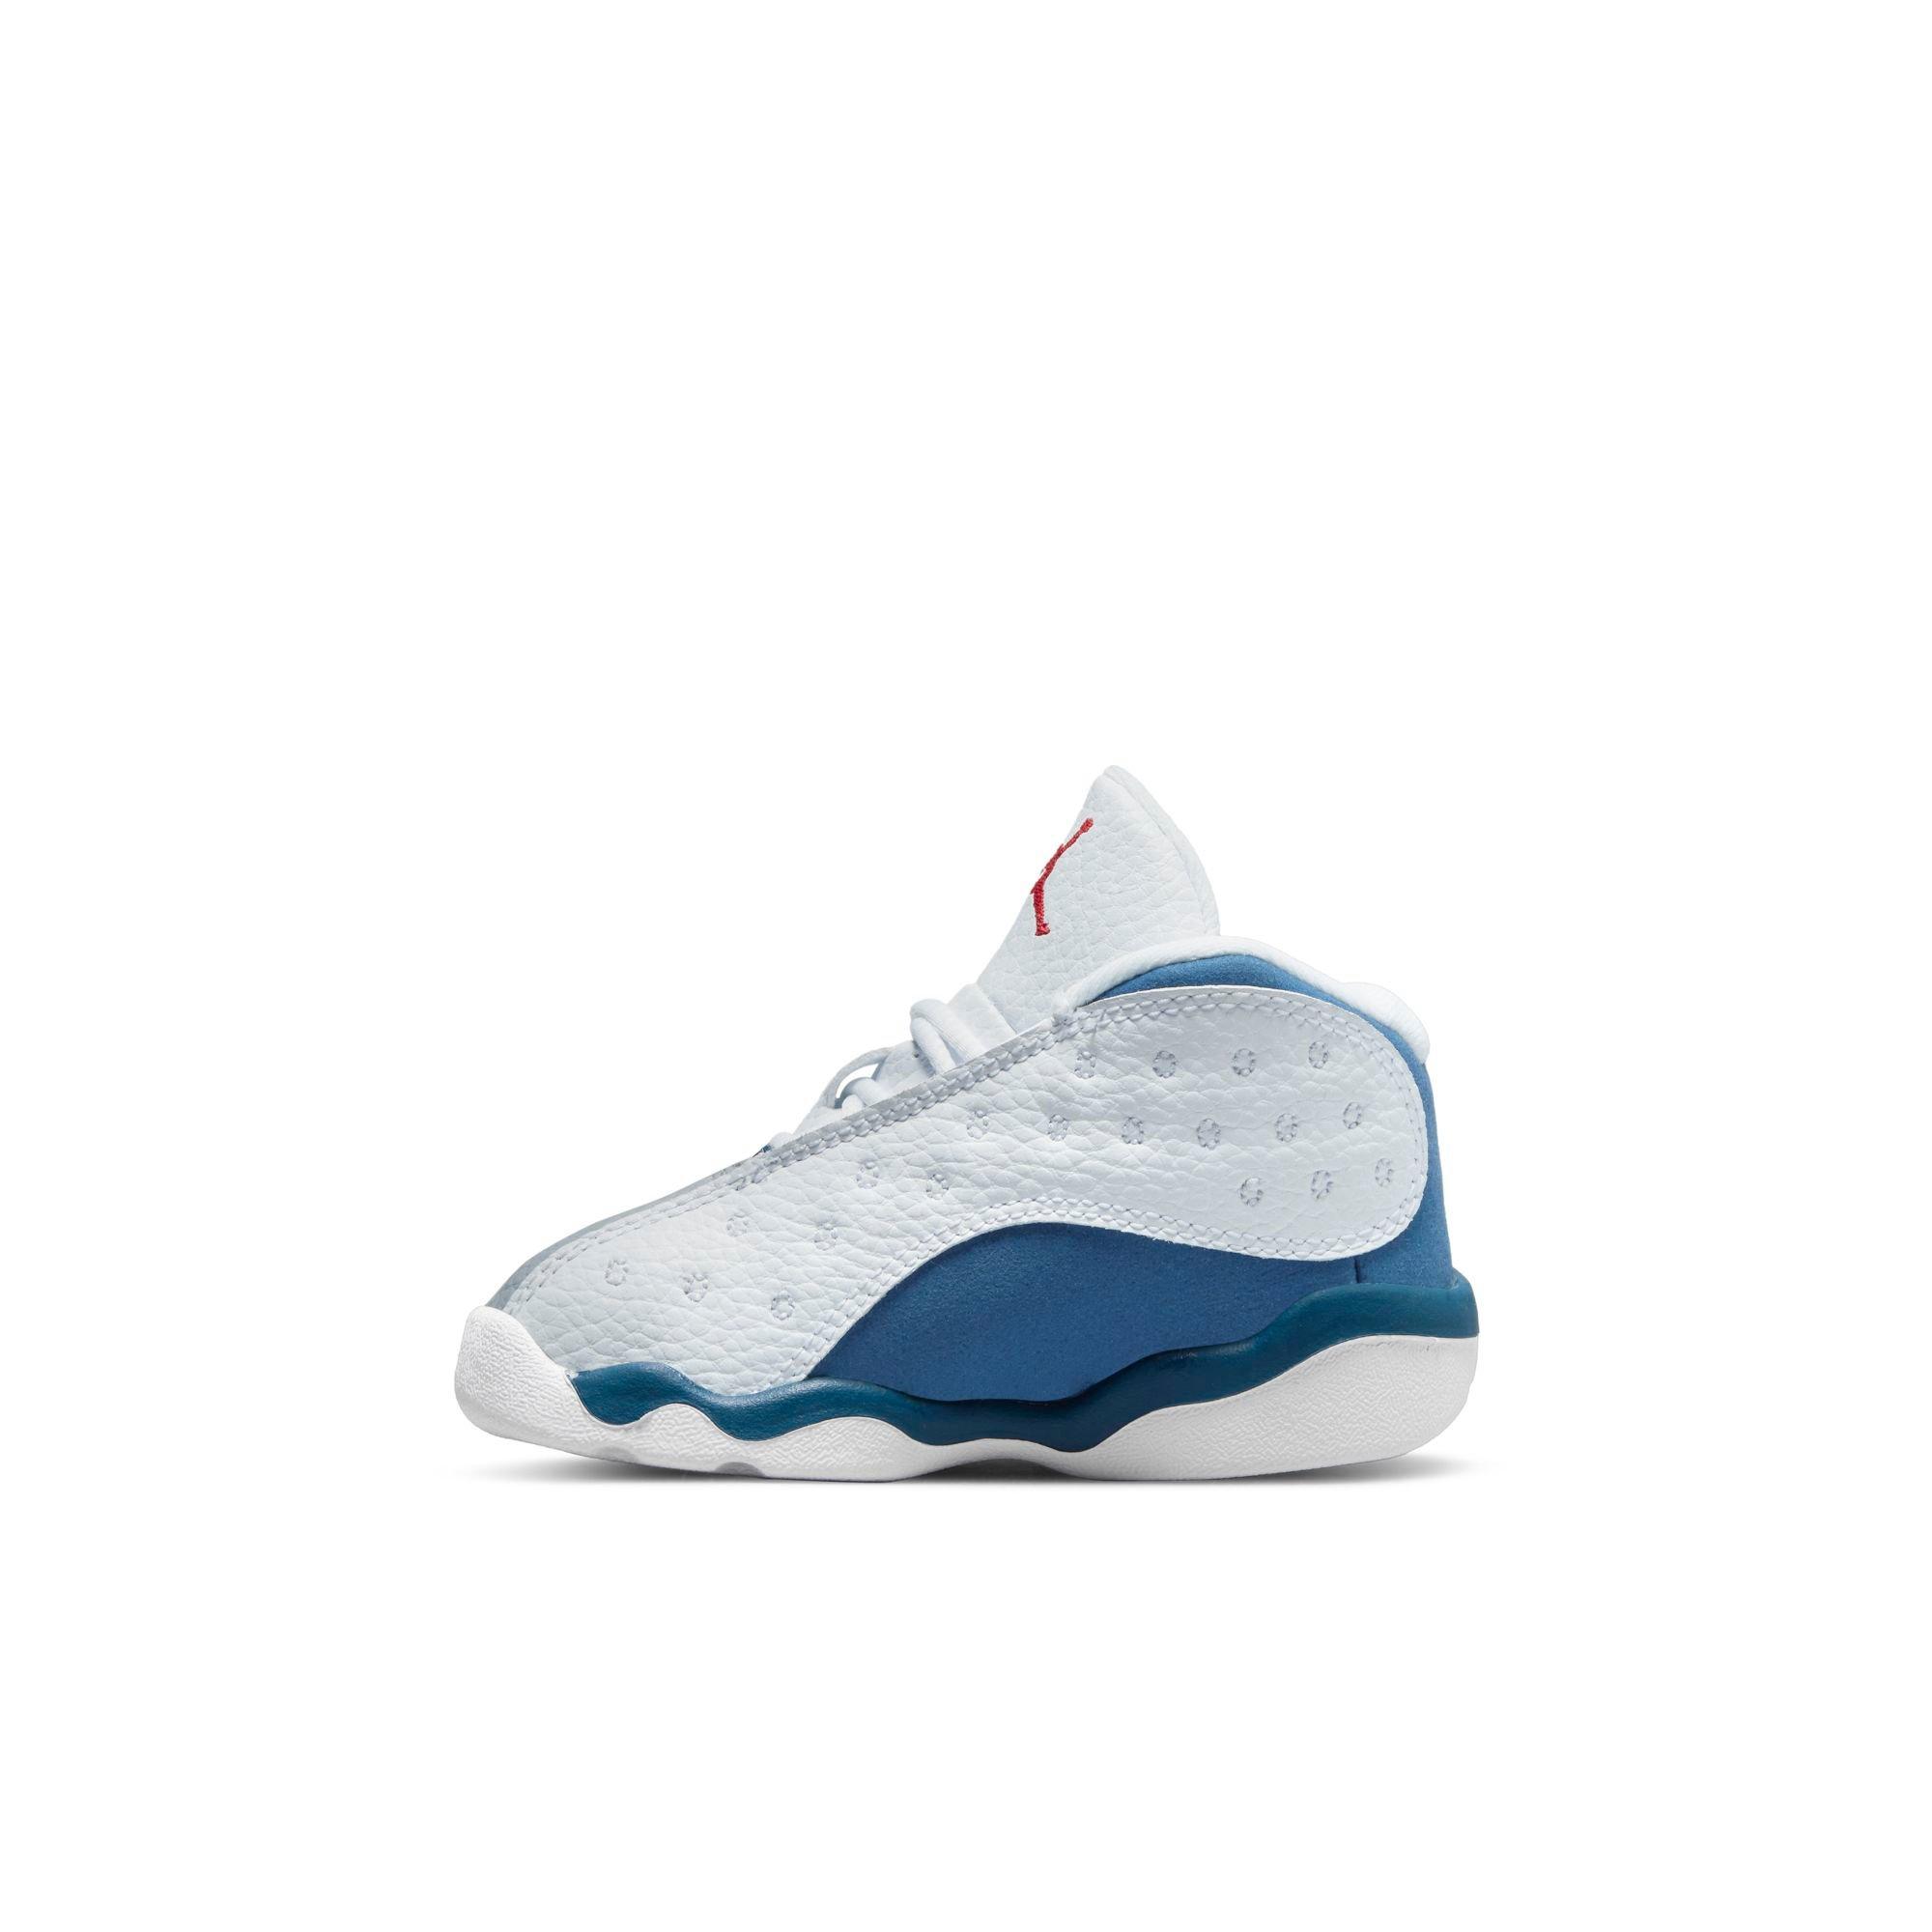 Sneakers Release – Jordan 13 Retro “White/Fire Red/French  Blue” Men’s & Kids’ Shoe Dropping 8/19